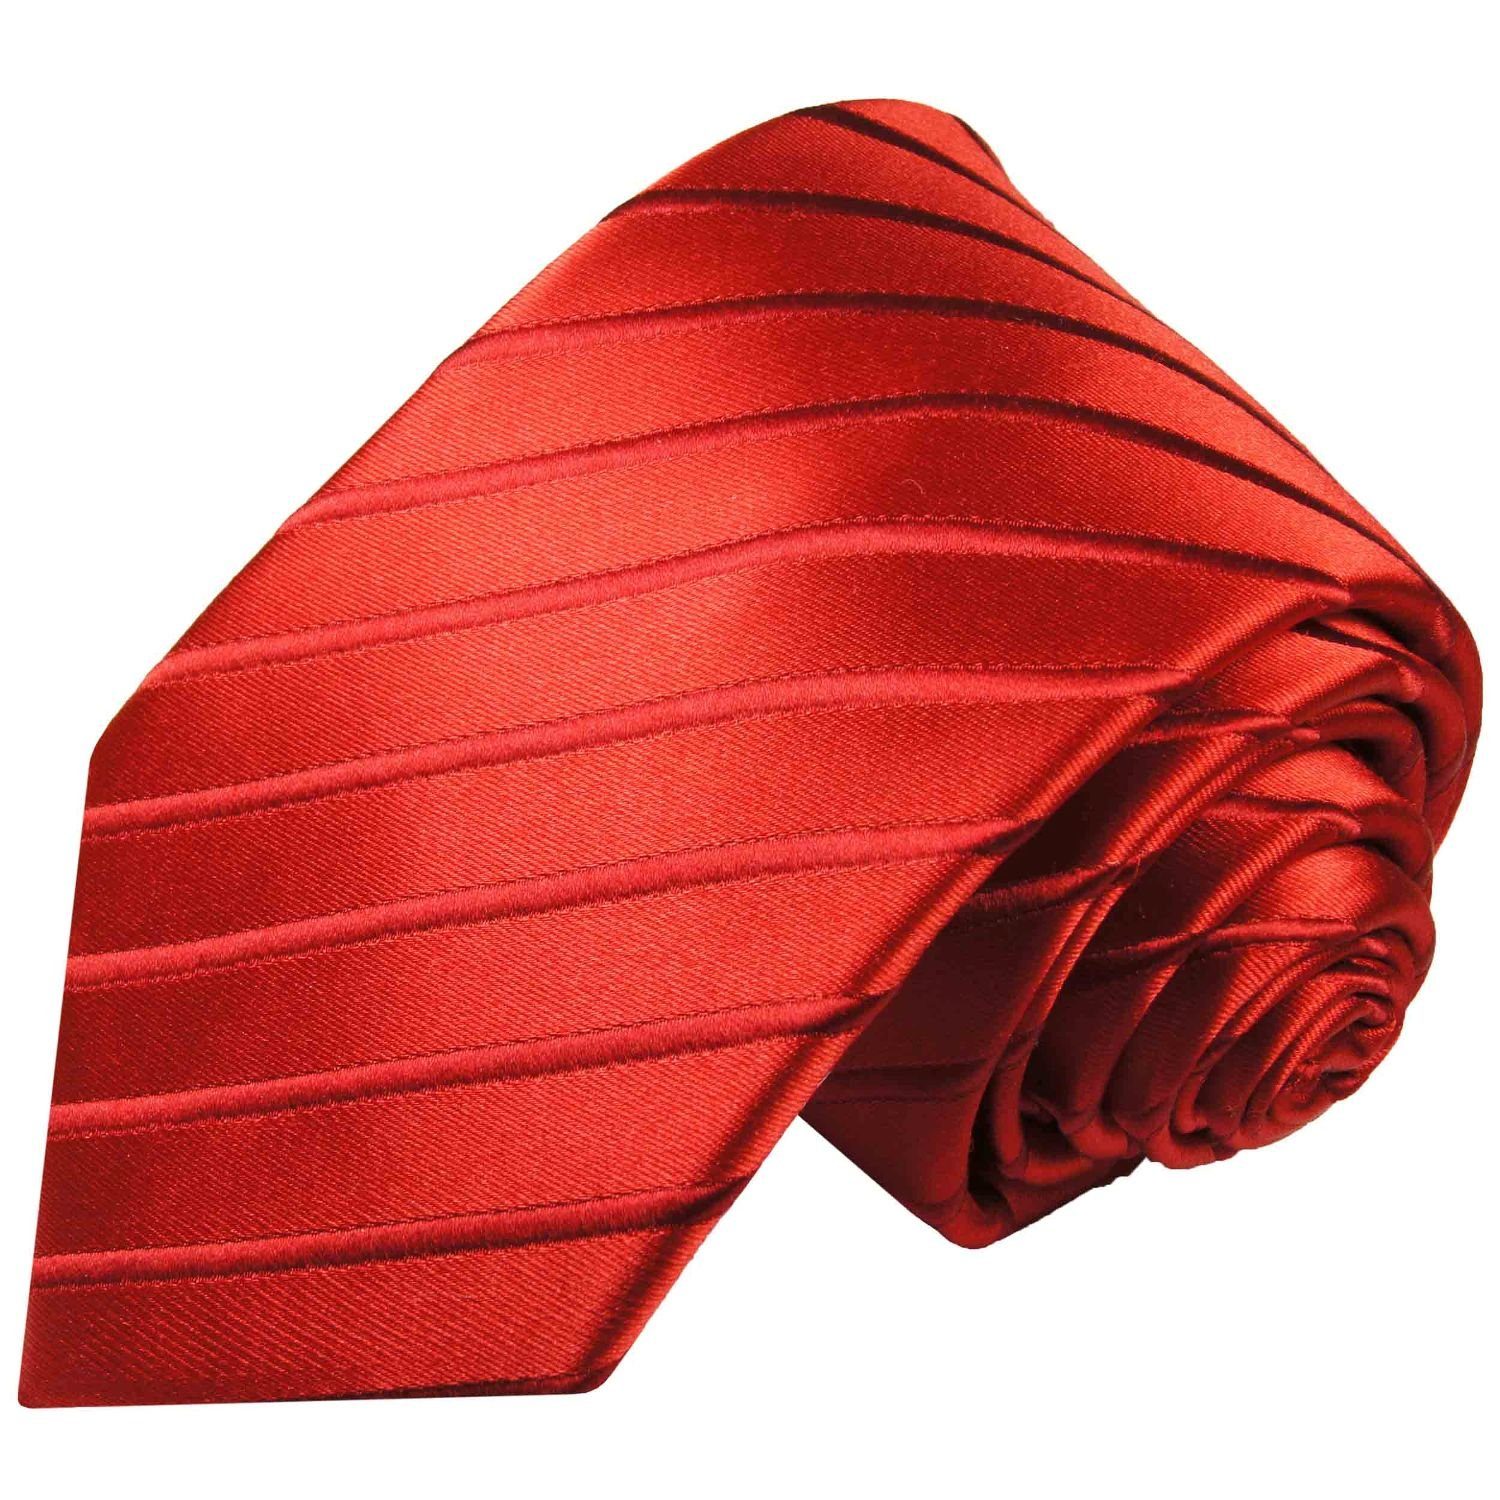 Paul Malone Krawatte Designer Seidenkrawatte Herren Schlips modern uni gestreift 100% Seide Schmal (6cm), rot 441